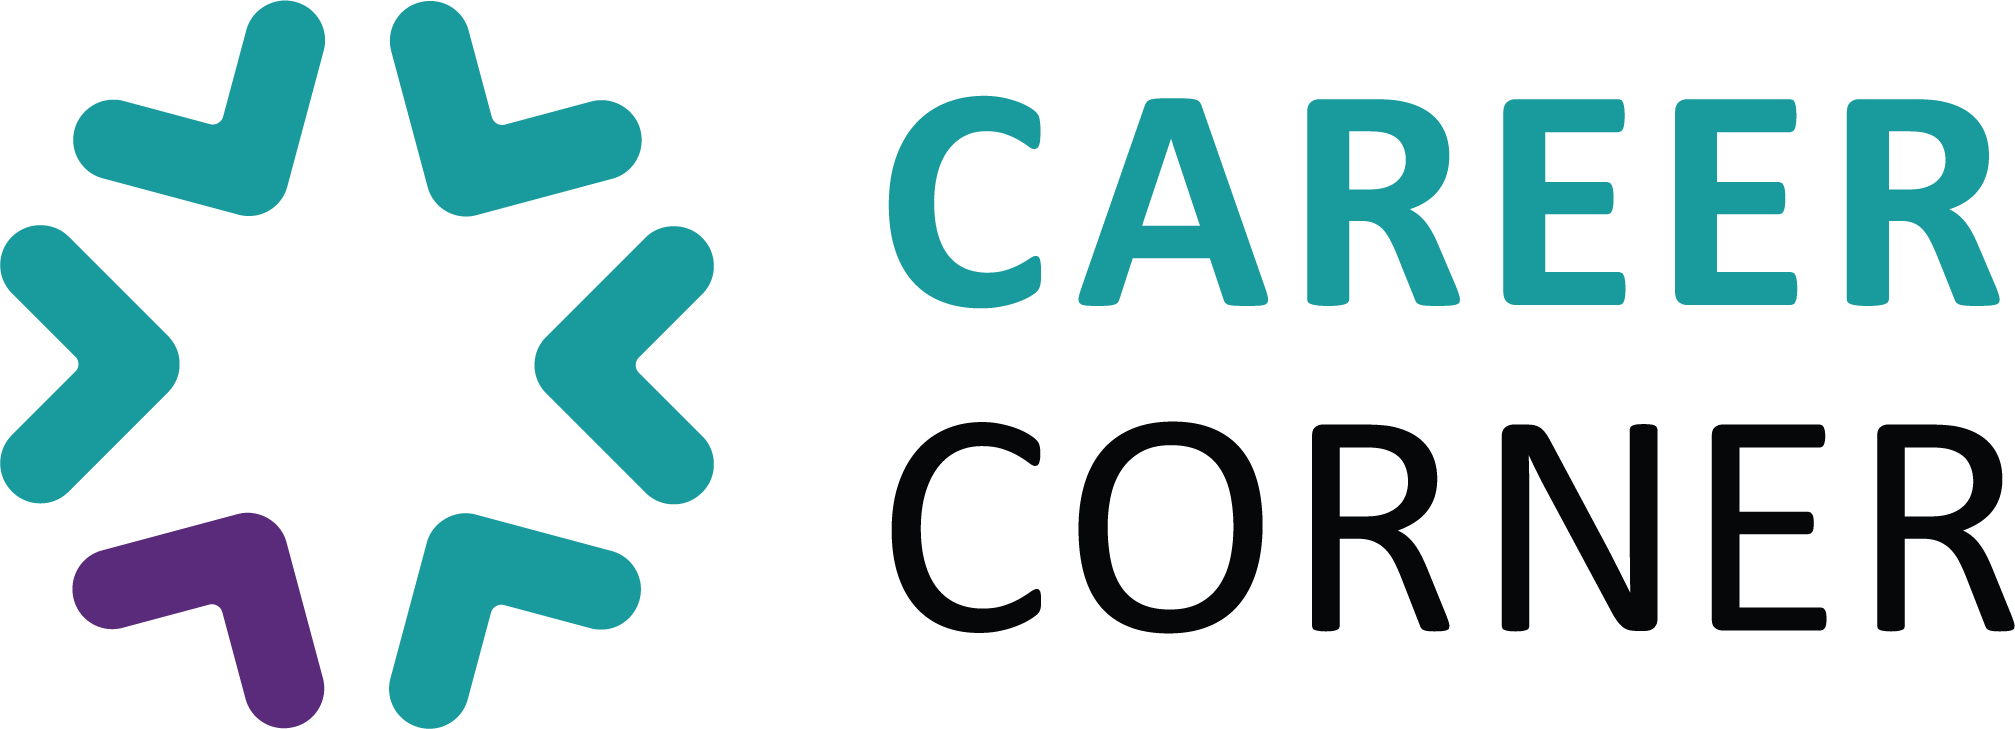 Career corner logo